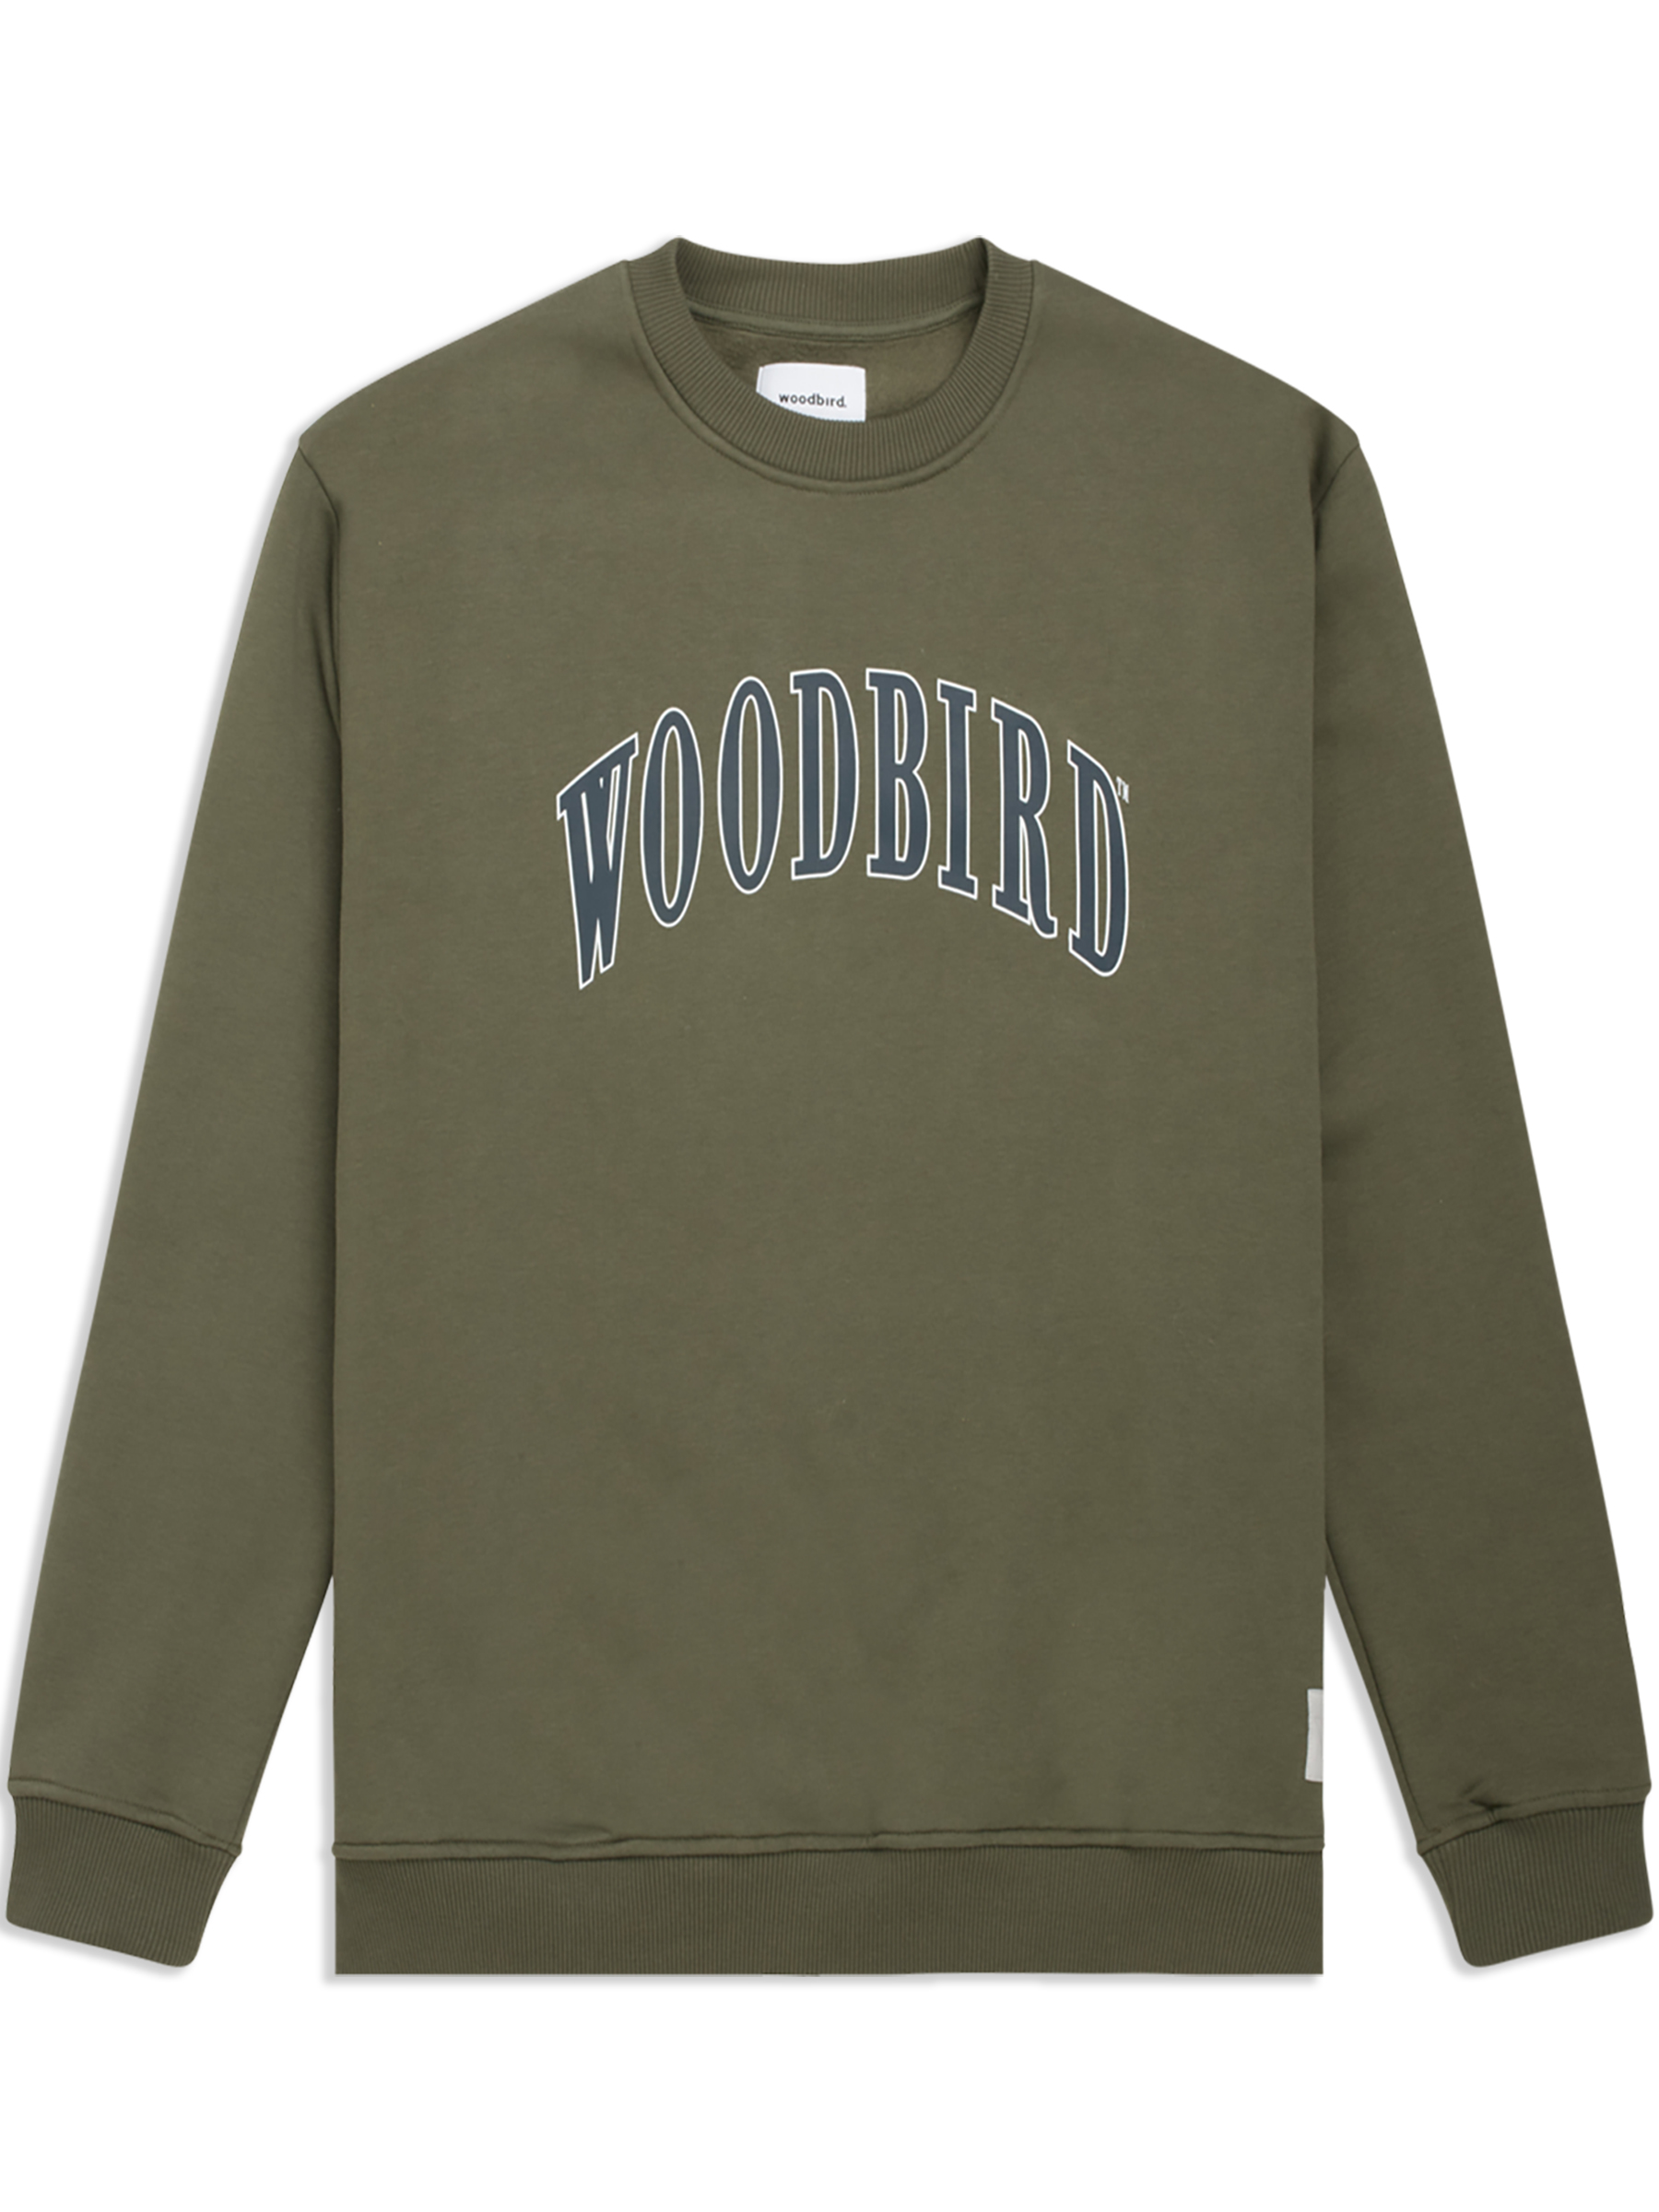 Woodbird Mufti College Sweatshirt, Army, S